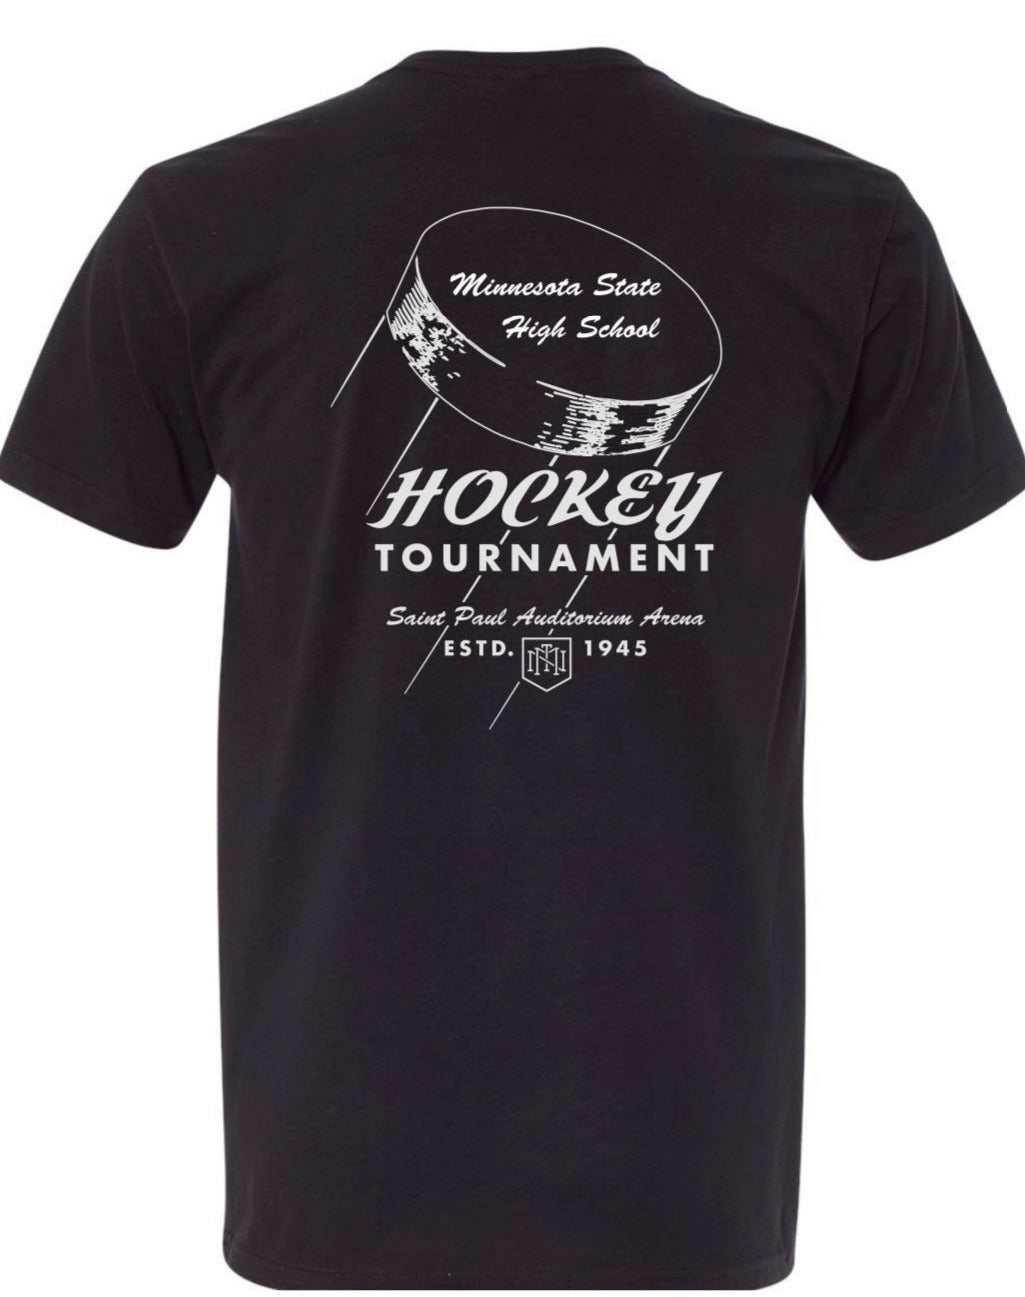 Vintage State Hockey Tournament - The Minnesotan